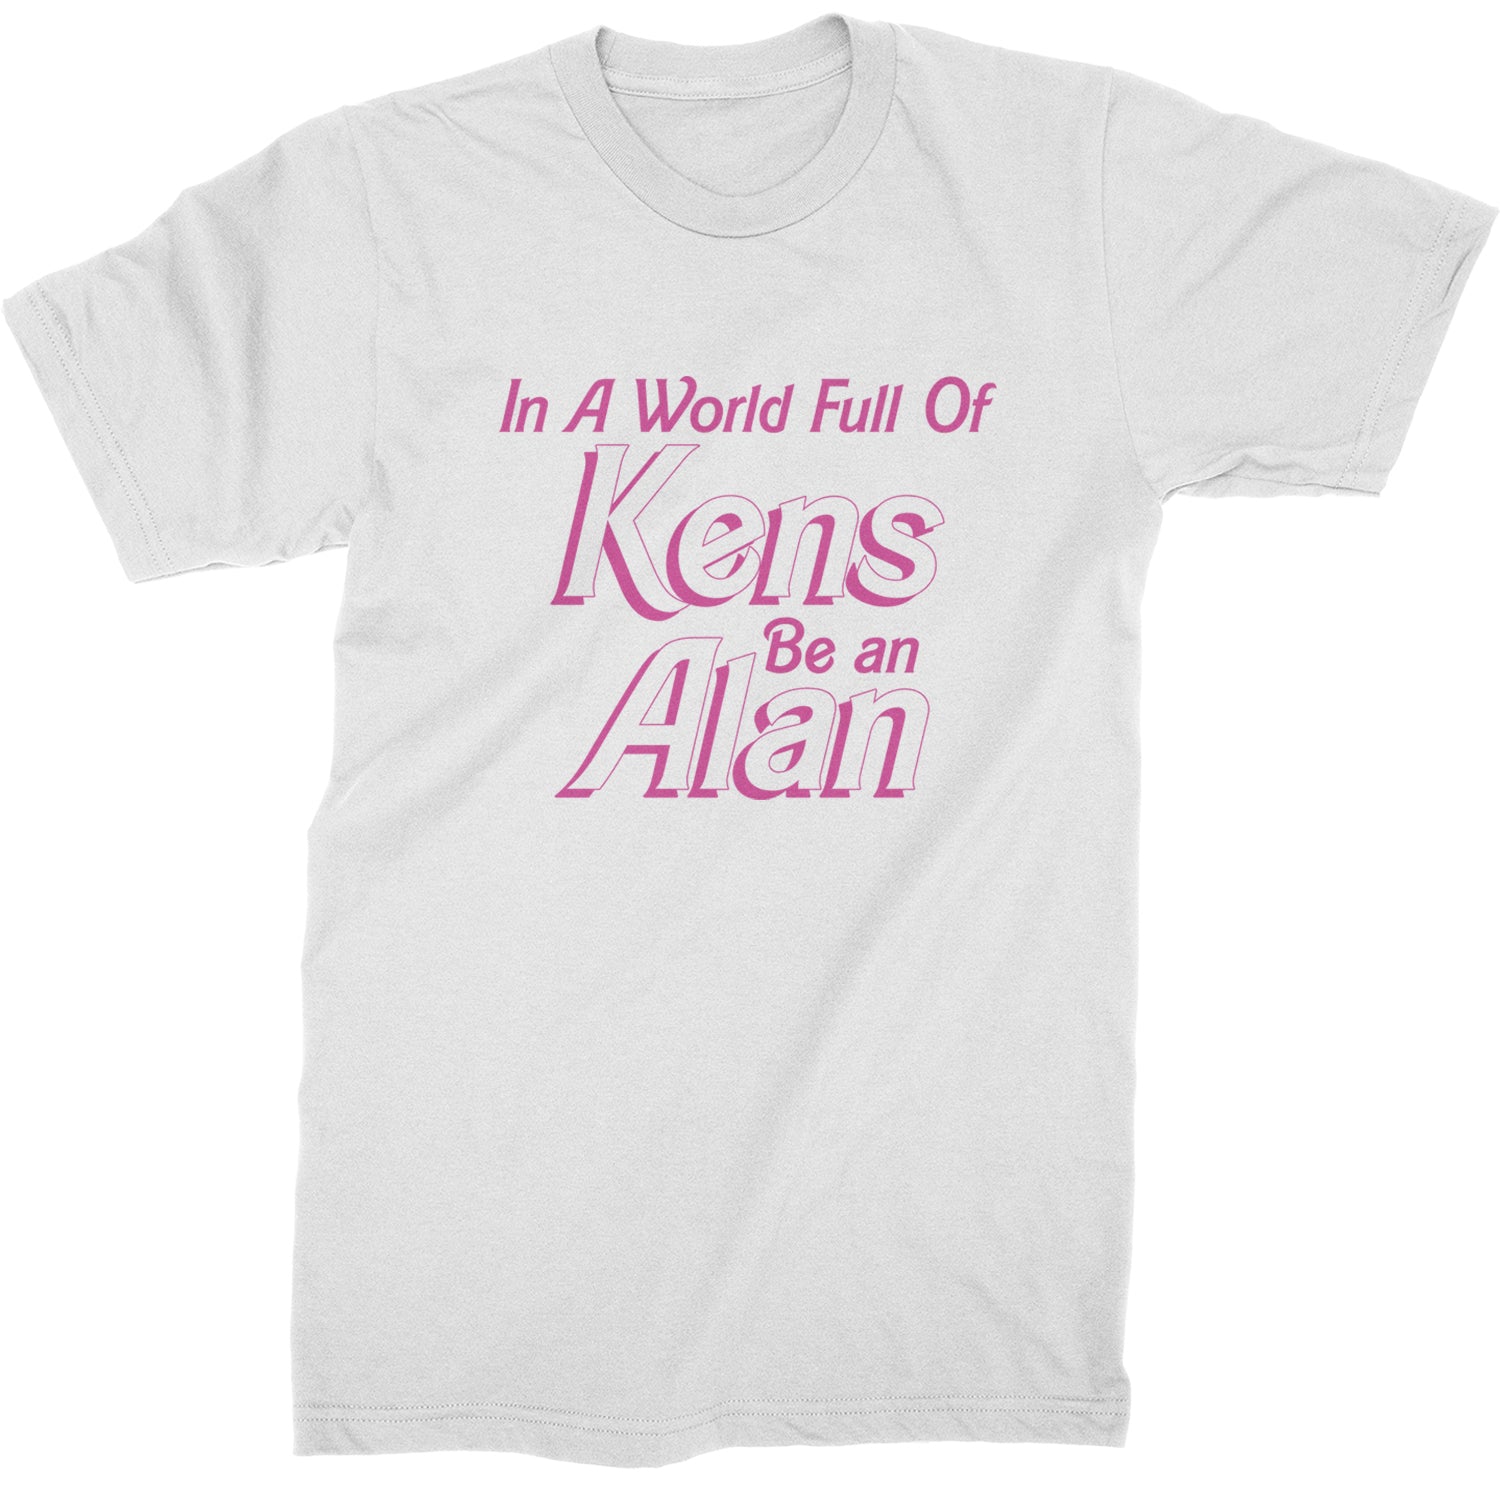 In A World Full Of Kens, Be an Alan Mens T-shirt